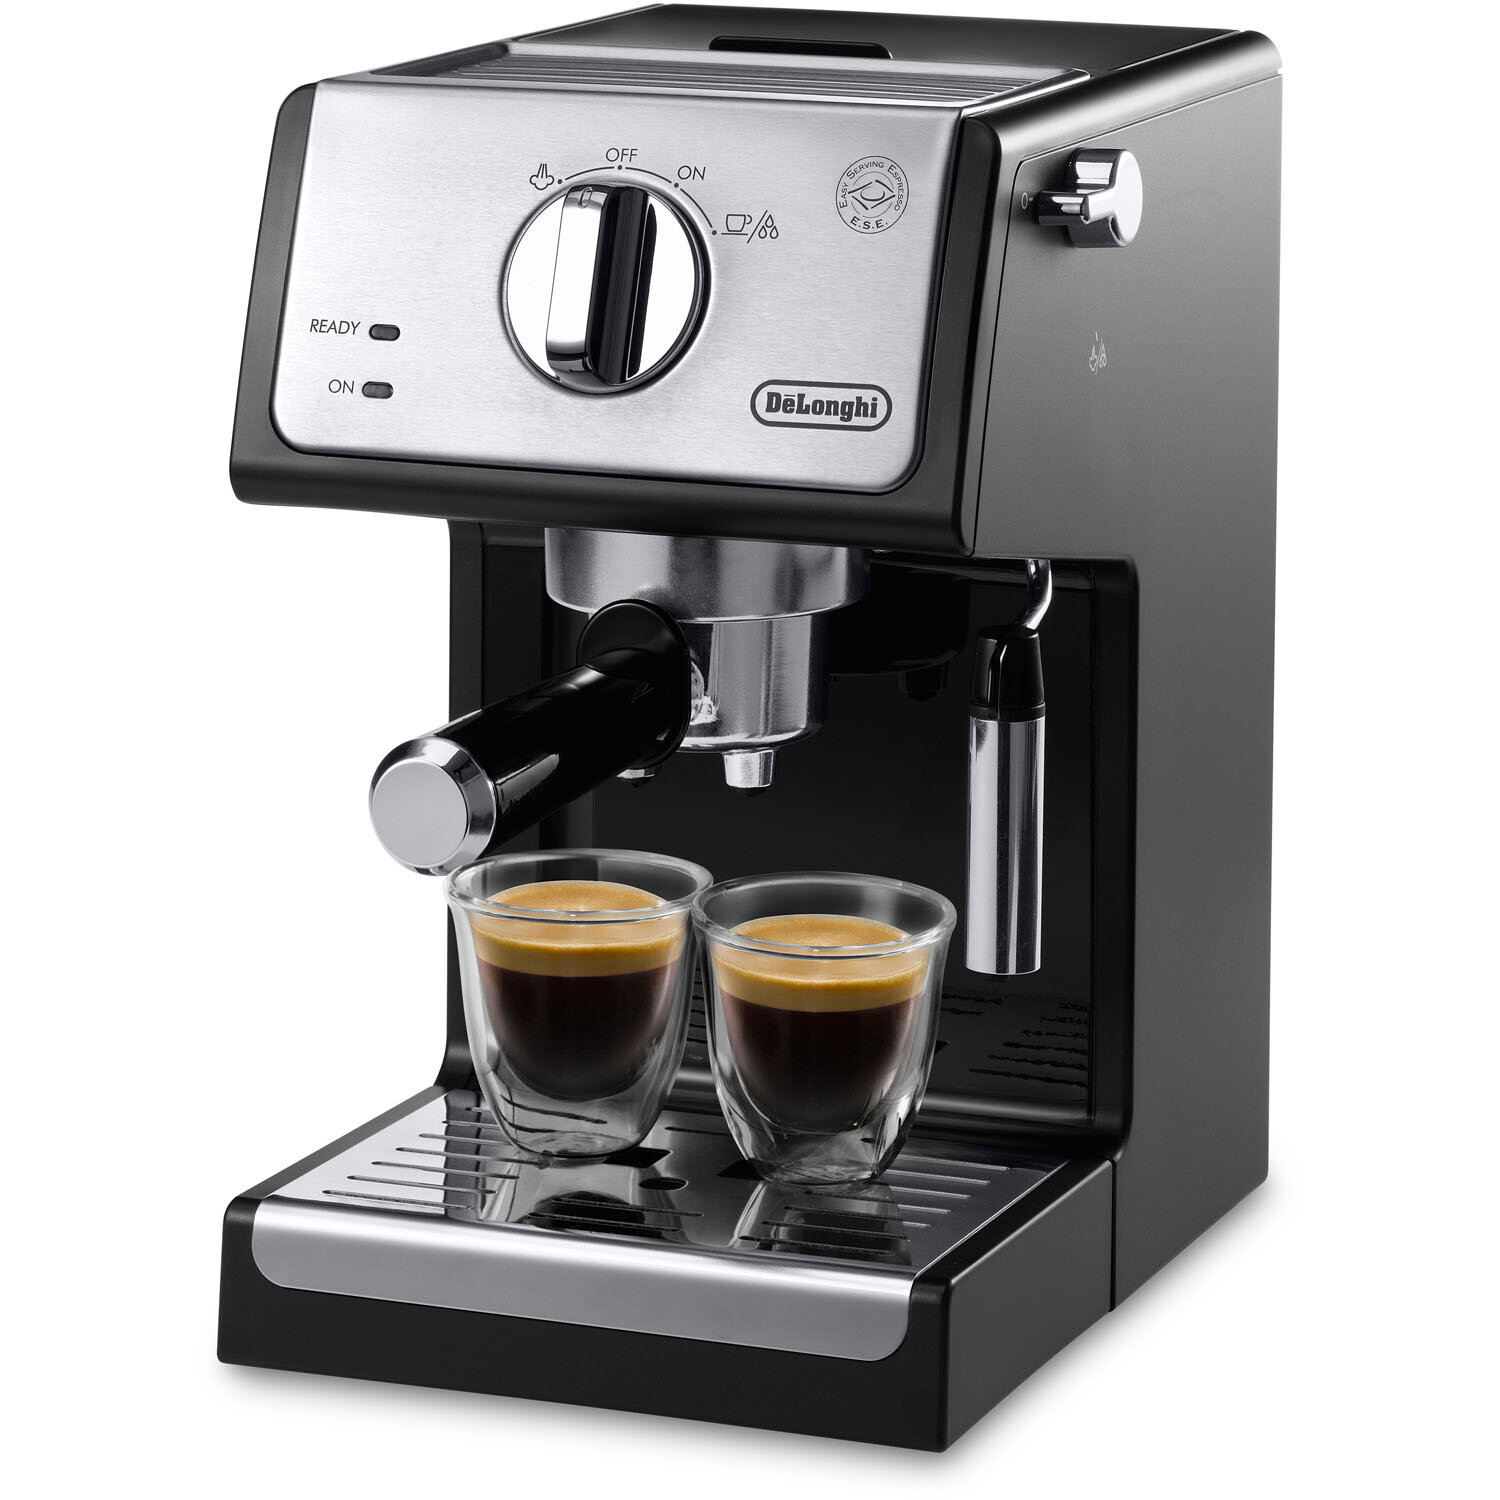 EU to UK Plug Adaptor Needed 15 Bar Coffee Machine for Espresso Cappuccino and Latte Machiato 1450W High Performance Stainless Steel Coffee Machine Kenwell Espresso Machine with Portafilter 